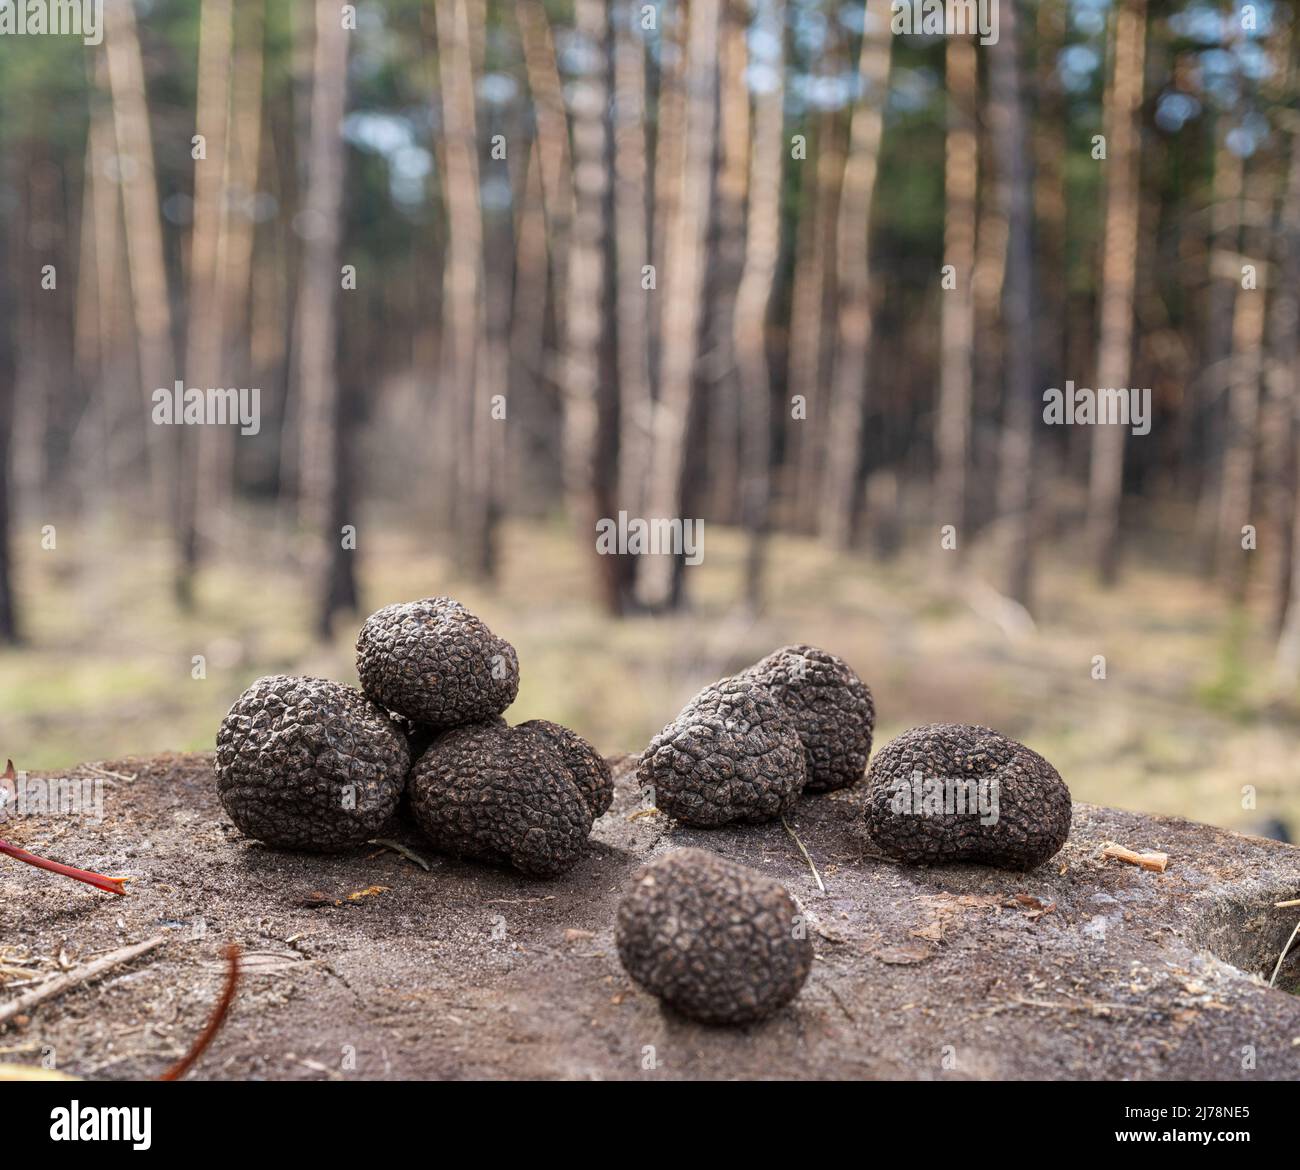 Truffle mushroom hunting. Black edible winter truffles on the wooden table. Nature background. Stock Photo